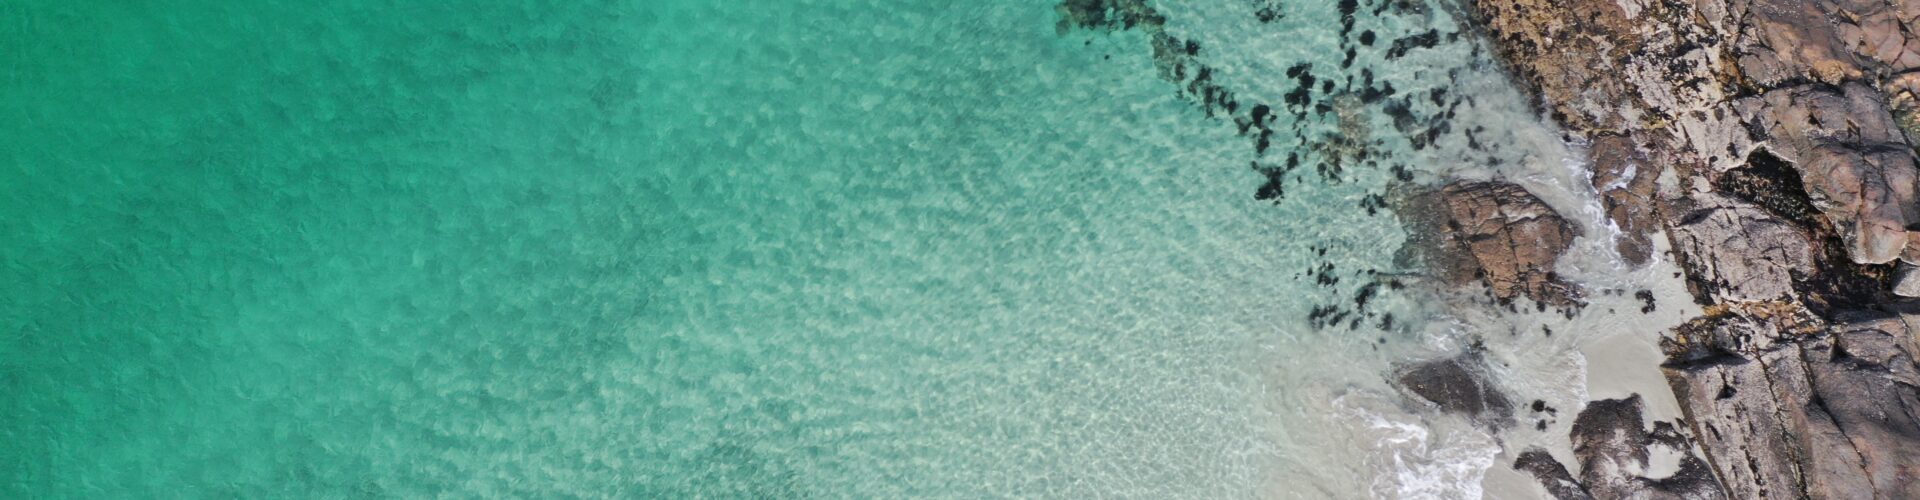 drone image of a marine coastal environement